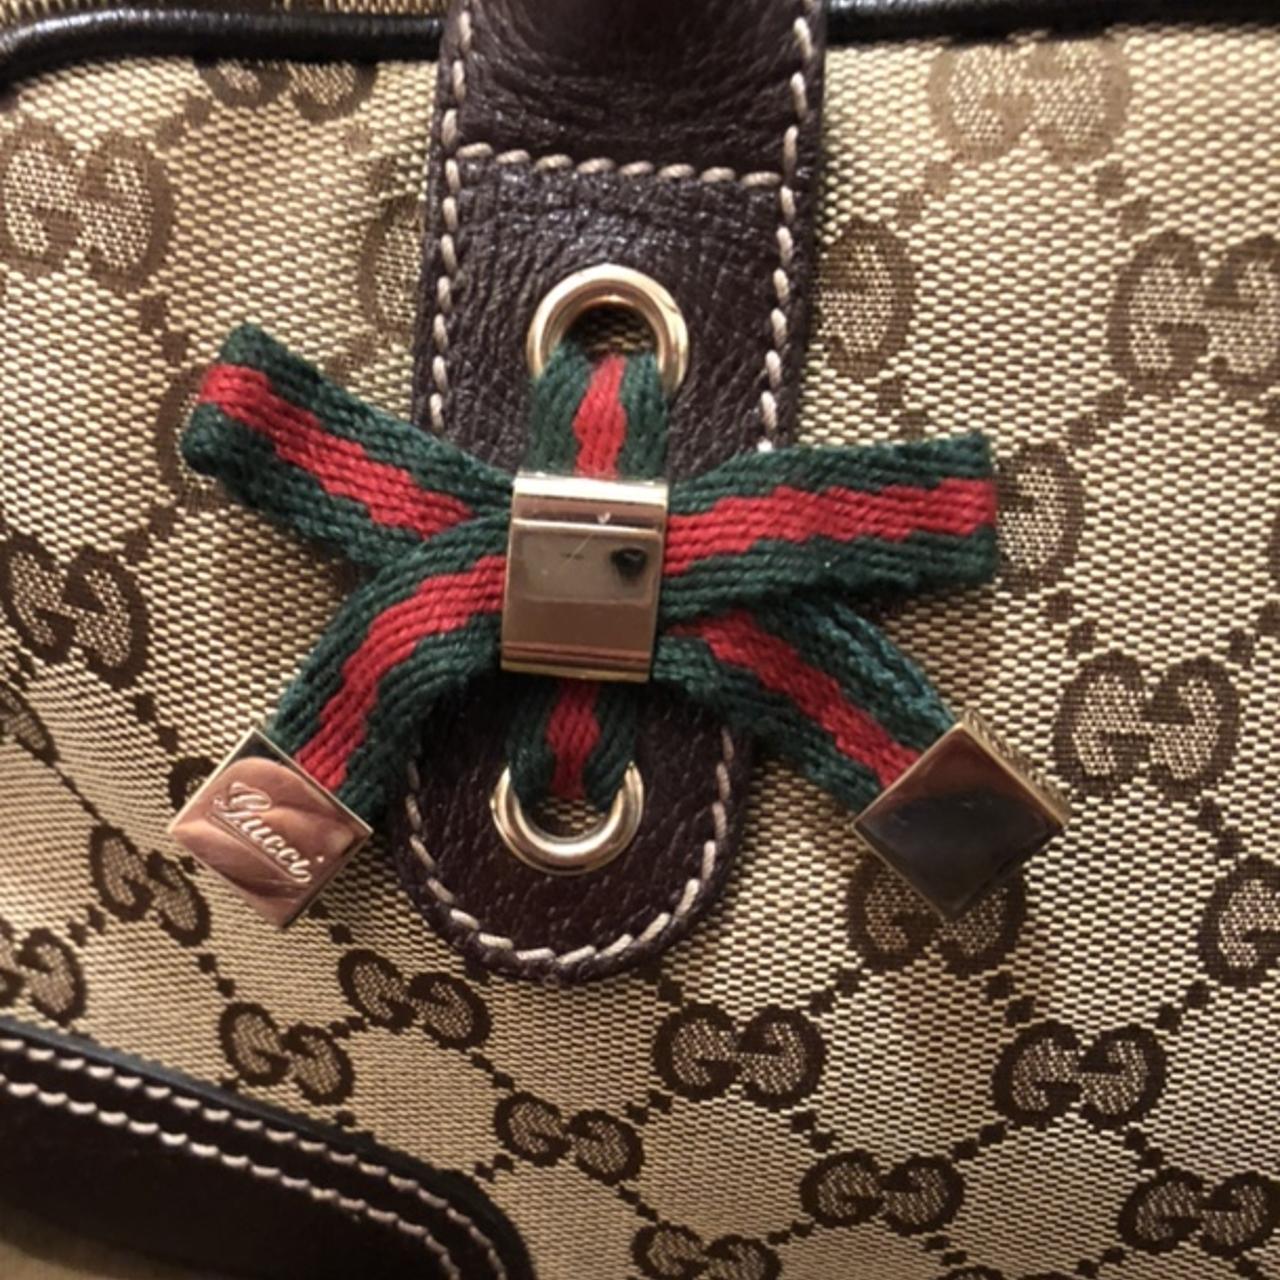 Gucci mini bag Vintage Perfect pop of color to - Depop